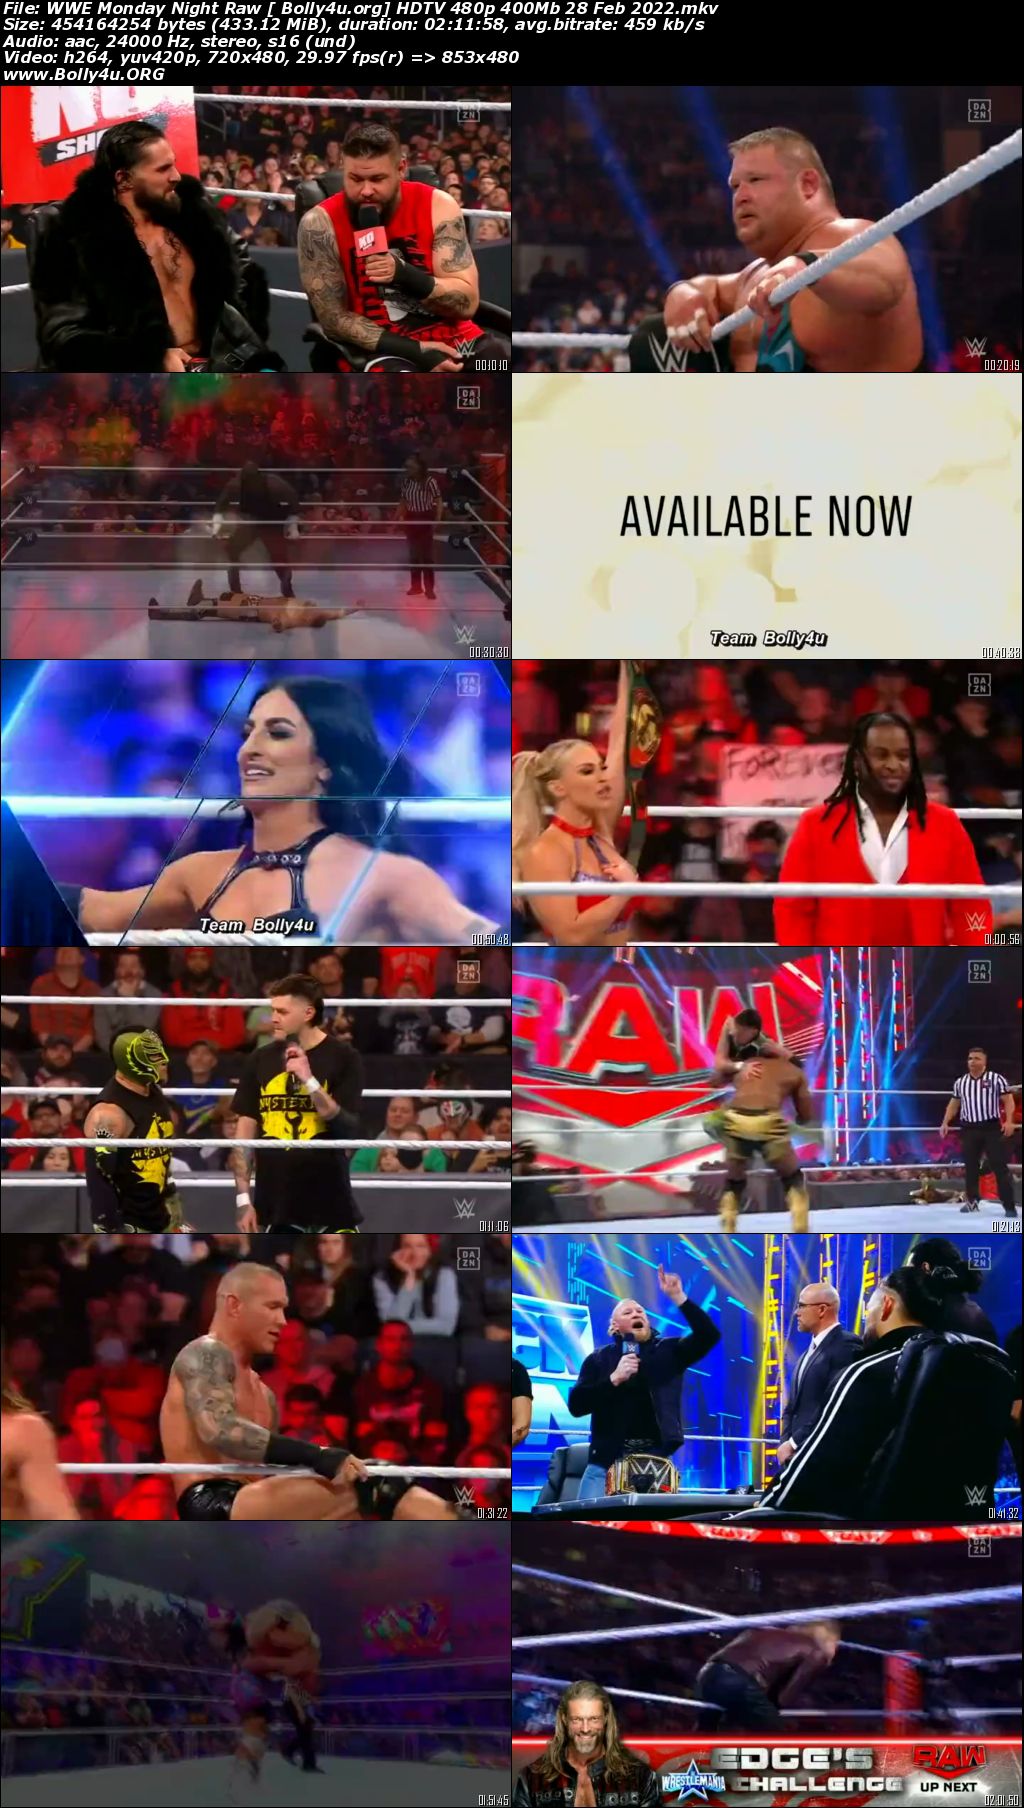 WWE Monday Night Raw HDTV 480p 400Mb 28 Feb 2022 Download